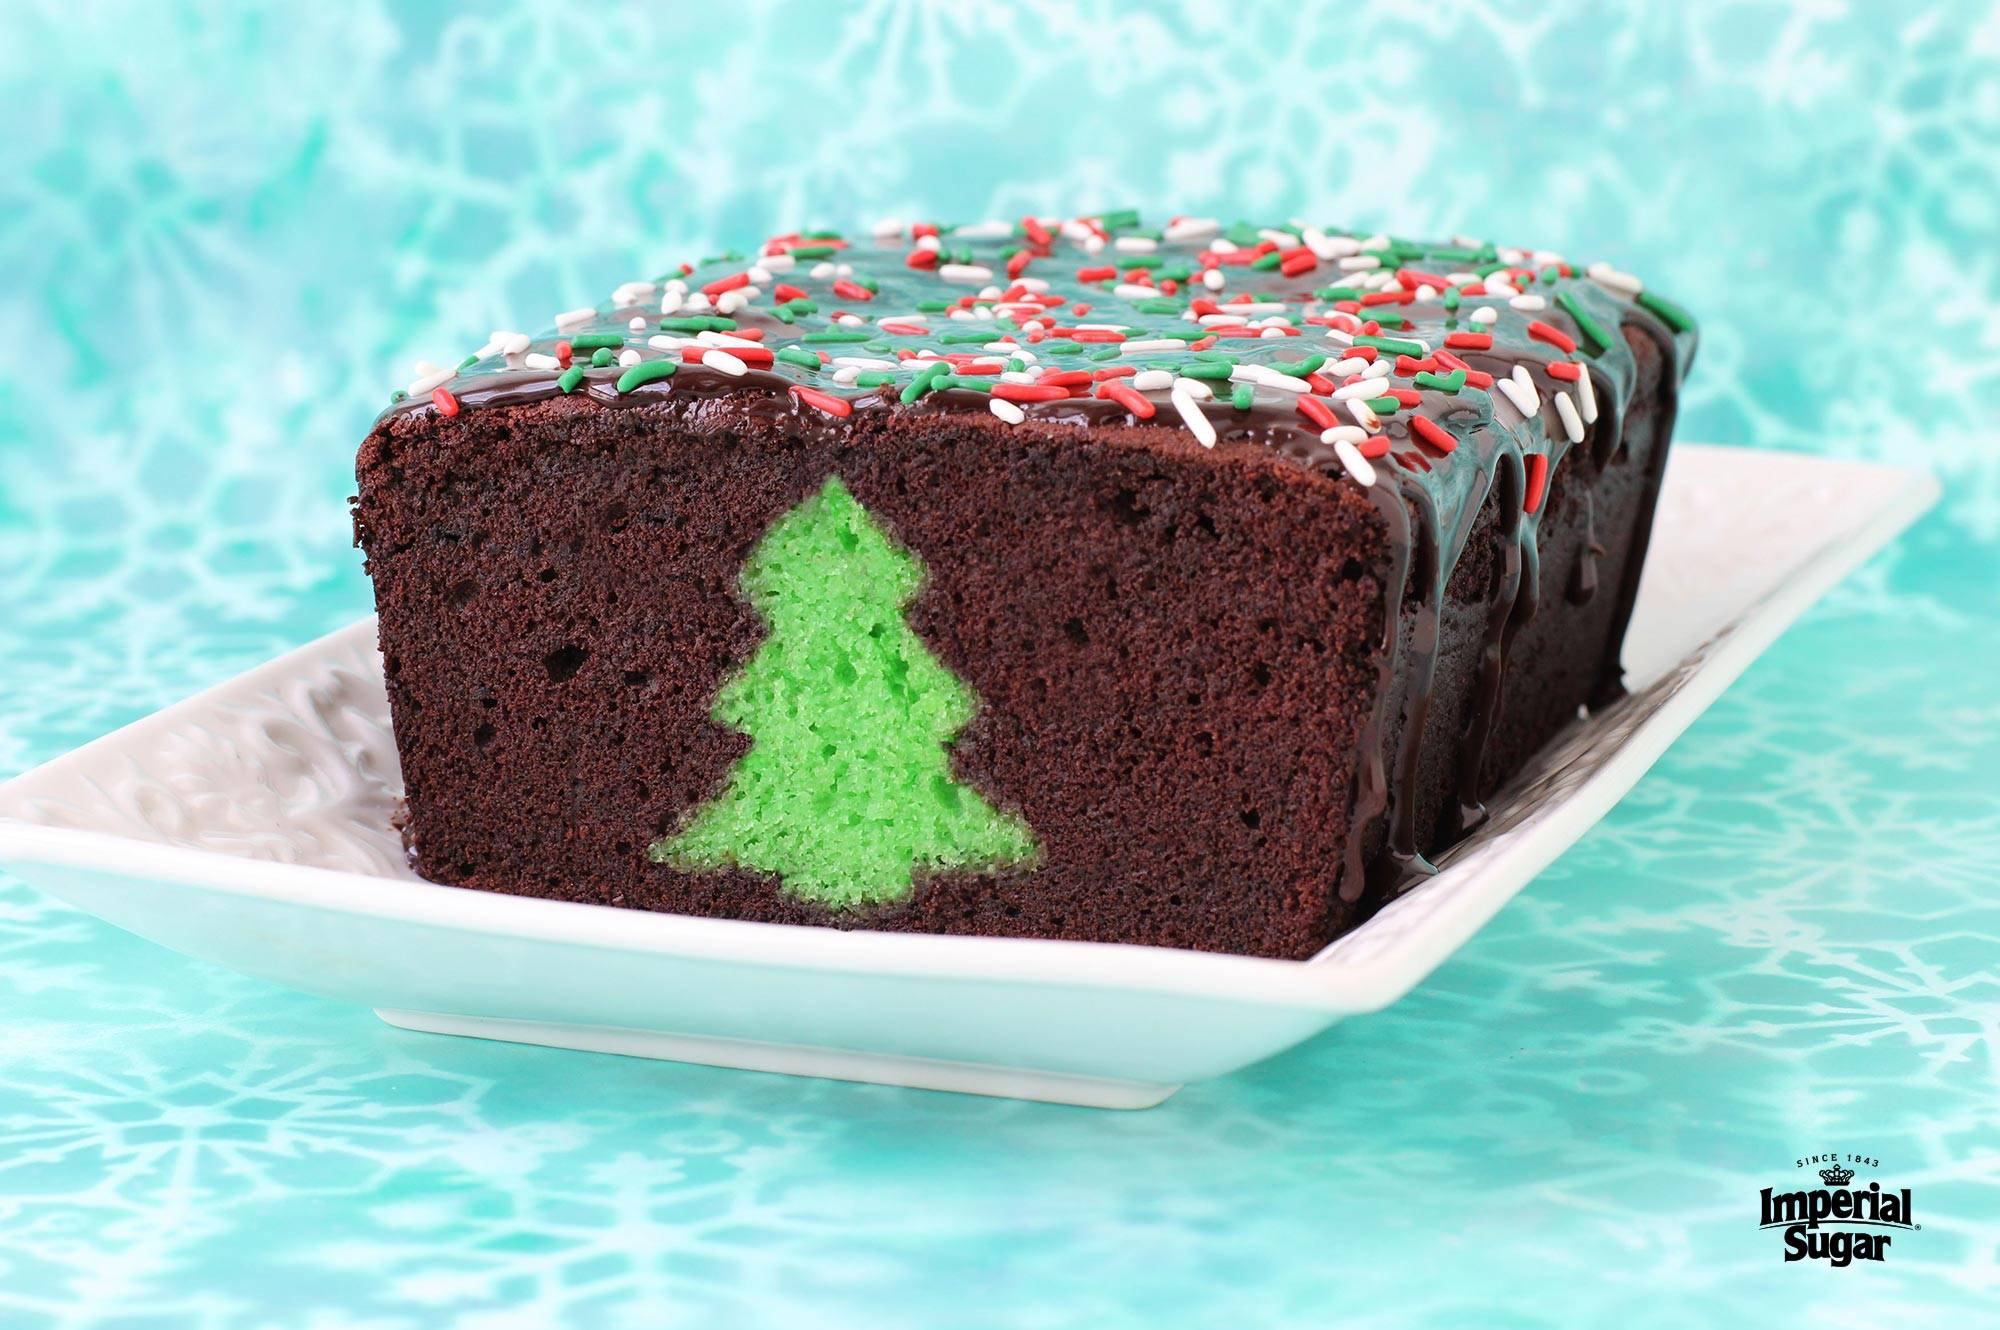 https://www.dixiecrystals.com/sites/default/files/recipe/chocolate-mint-christmas-peek-a-boo-cake-imperial.jpg